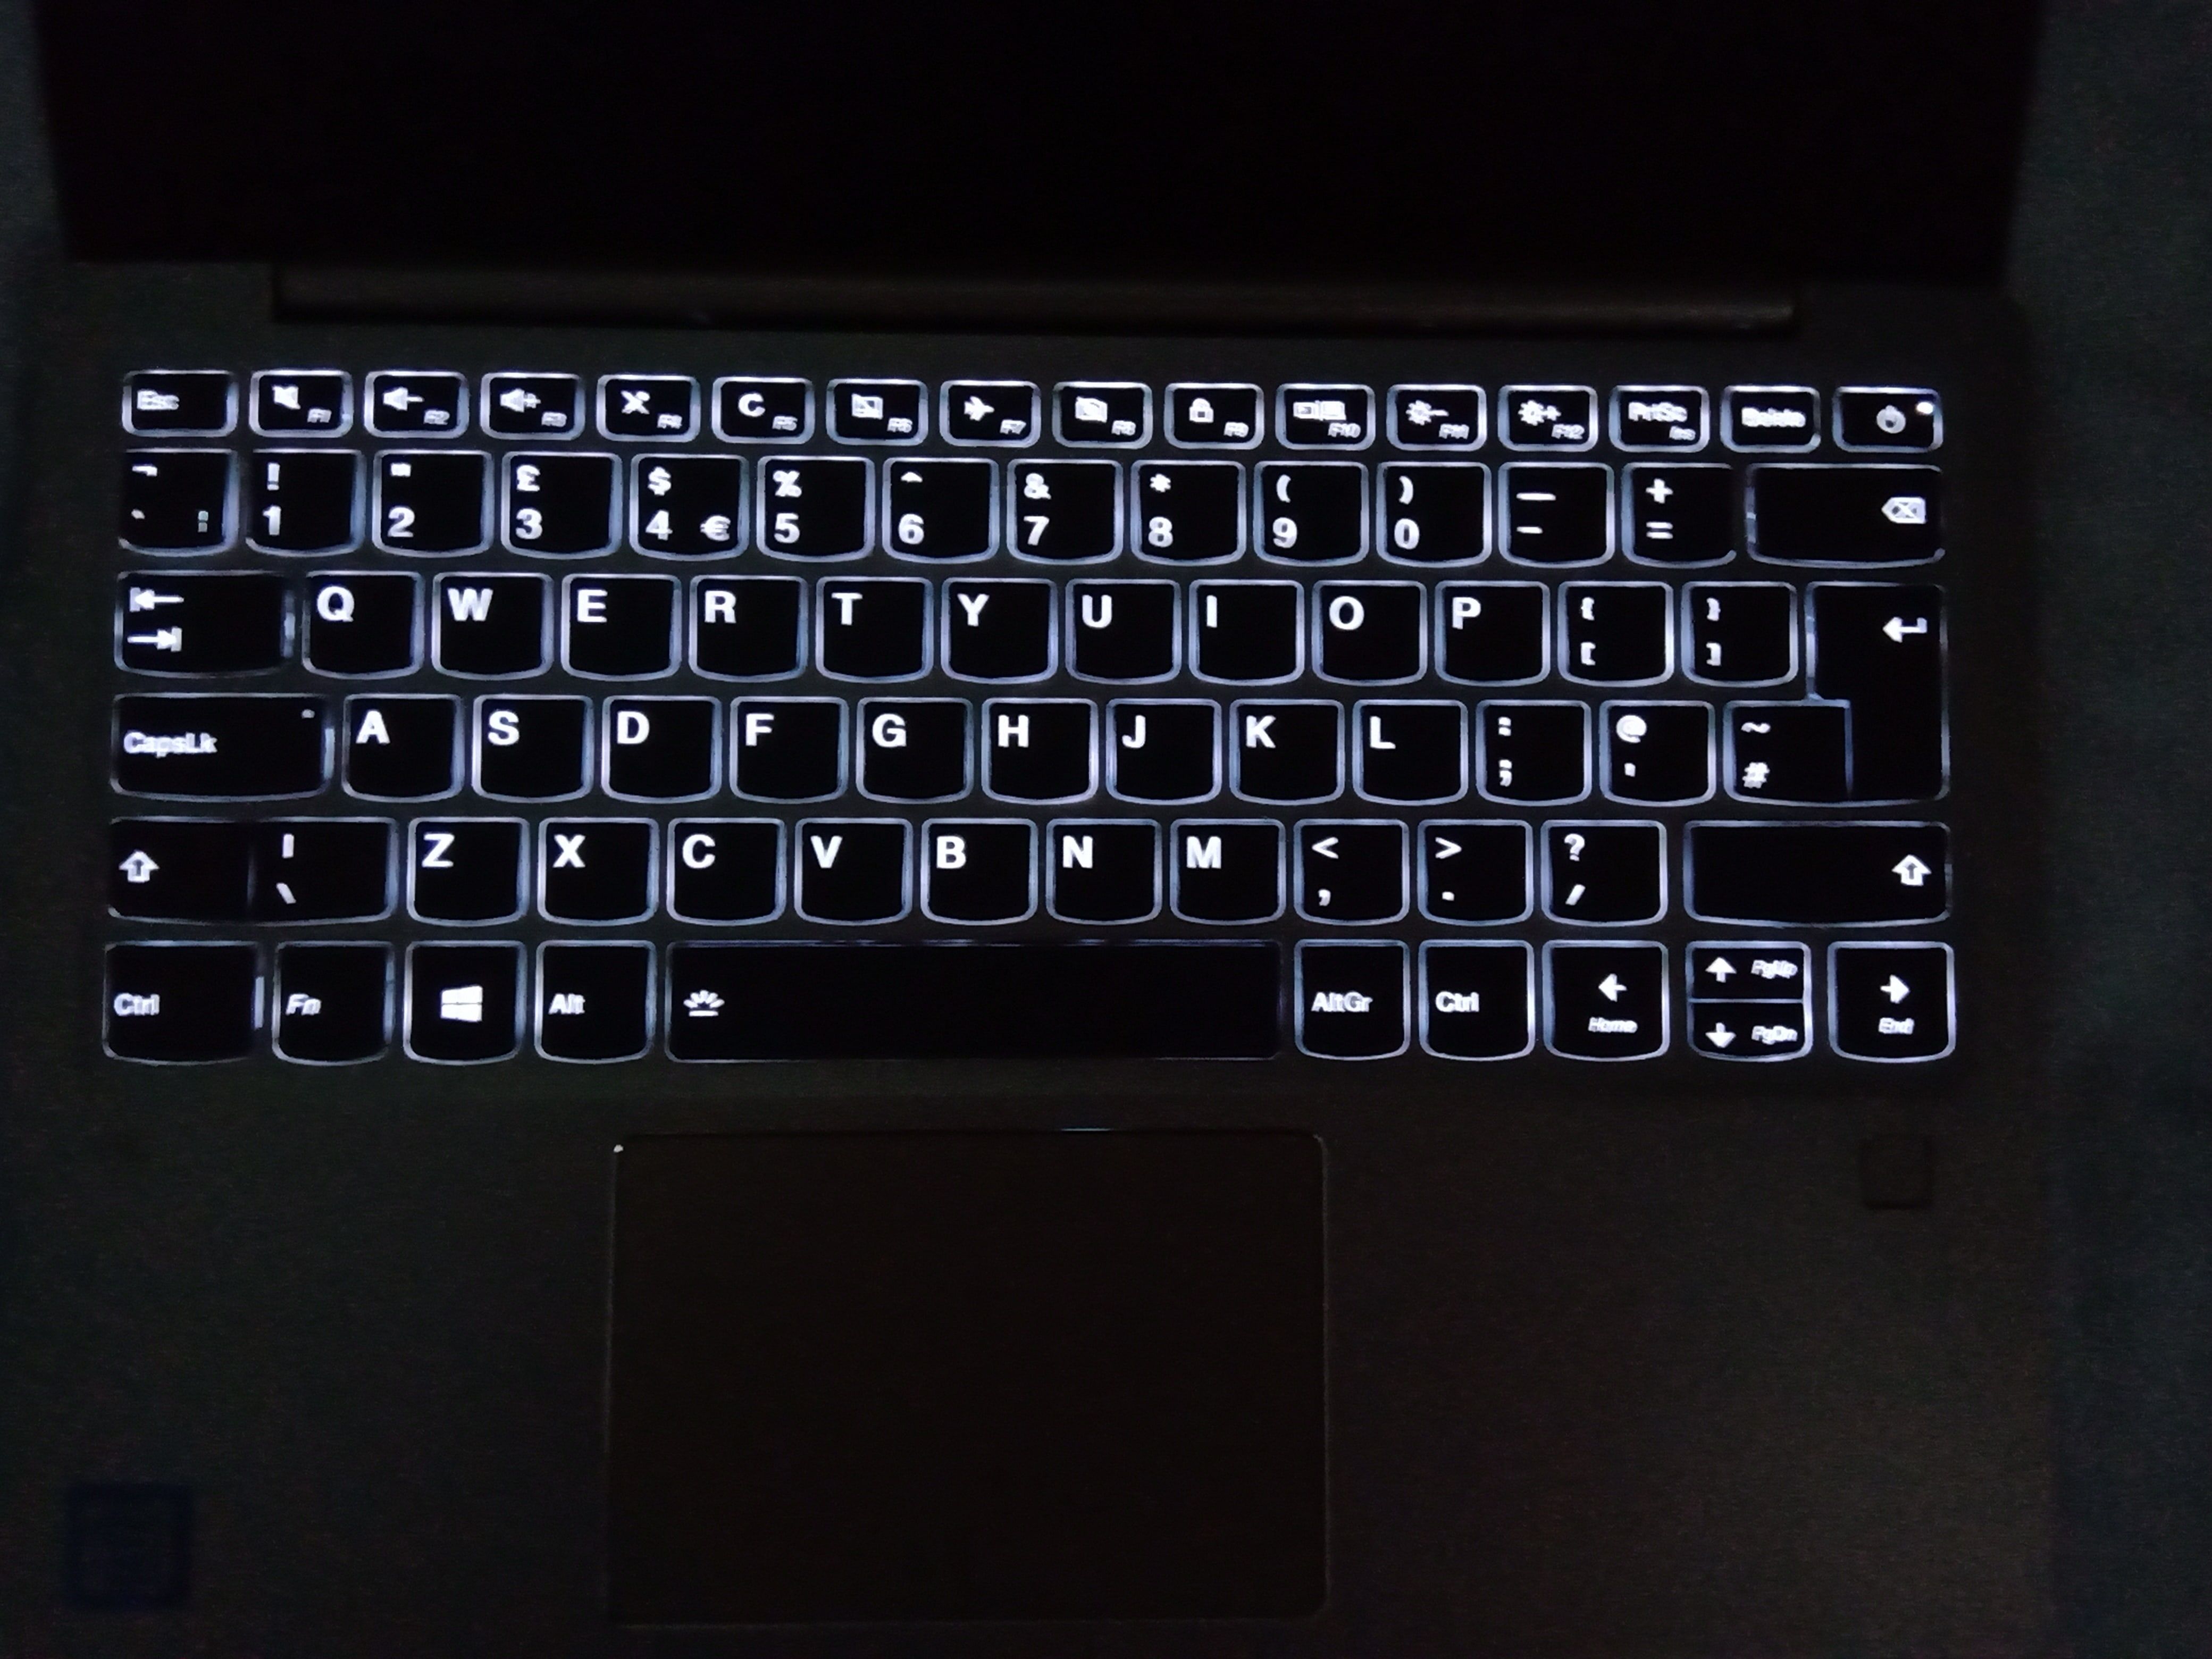 Legion клавиатура подсветка. Ноутбук Lenovo IDEAPAD s145 клавиатура. Lenovo IDEAPAD 1 клавиатура. Клавиатура с подсветкой для Lenovo IDEAPAD s145 15. Lenovo THINKPAD t490 клавиатура.